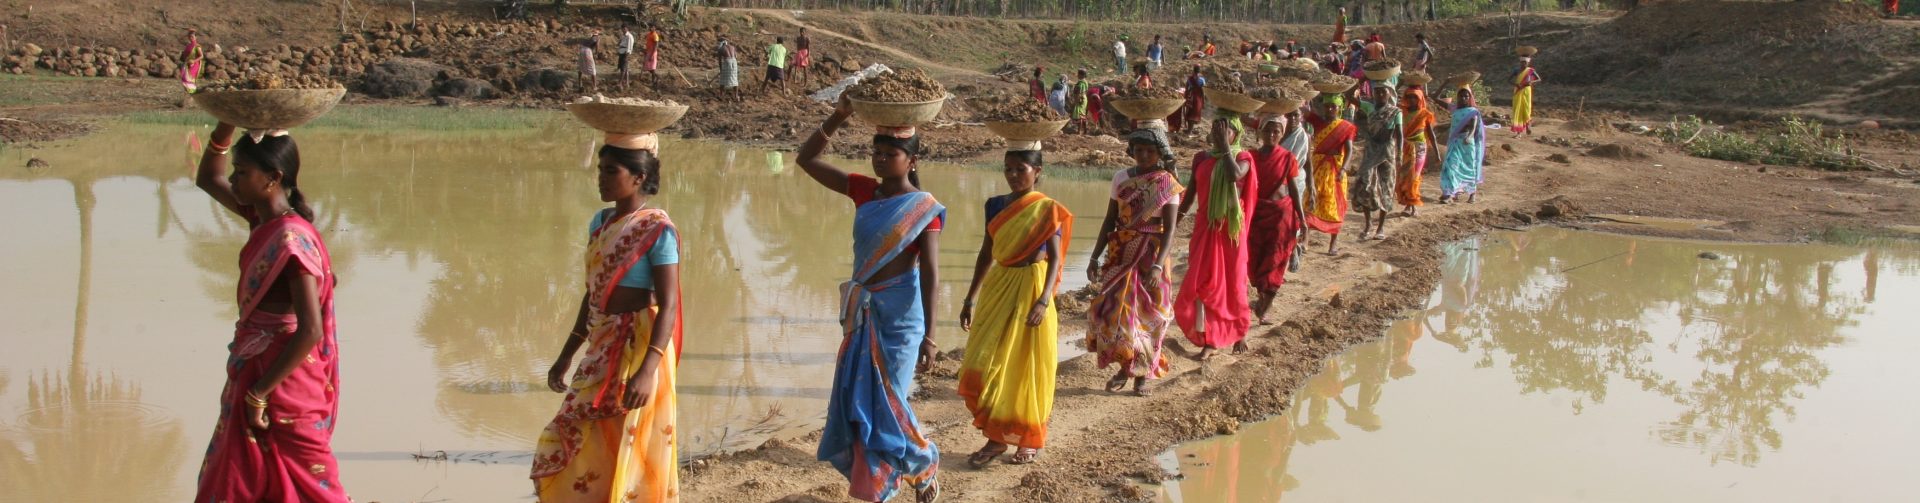 Study: India’s National Rural Employment Guarantee Scheme has positive impact on participants’ welfare